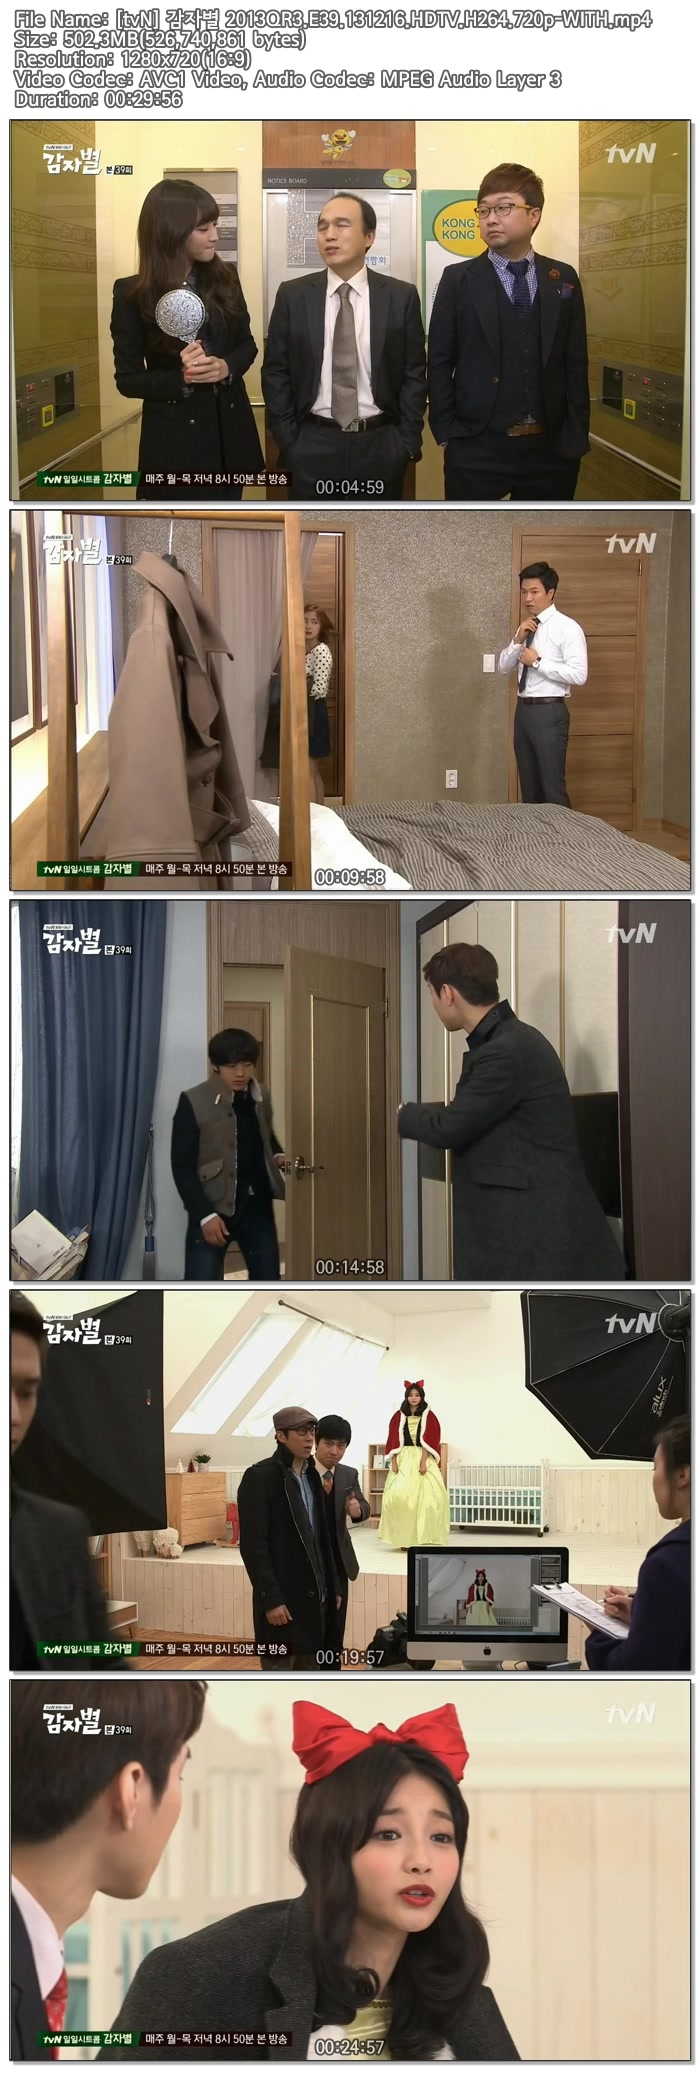 [tvN]감자별2013QR3 E39 131216 H264 720p-WITH